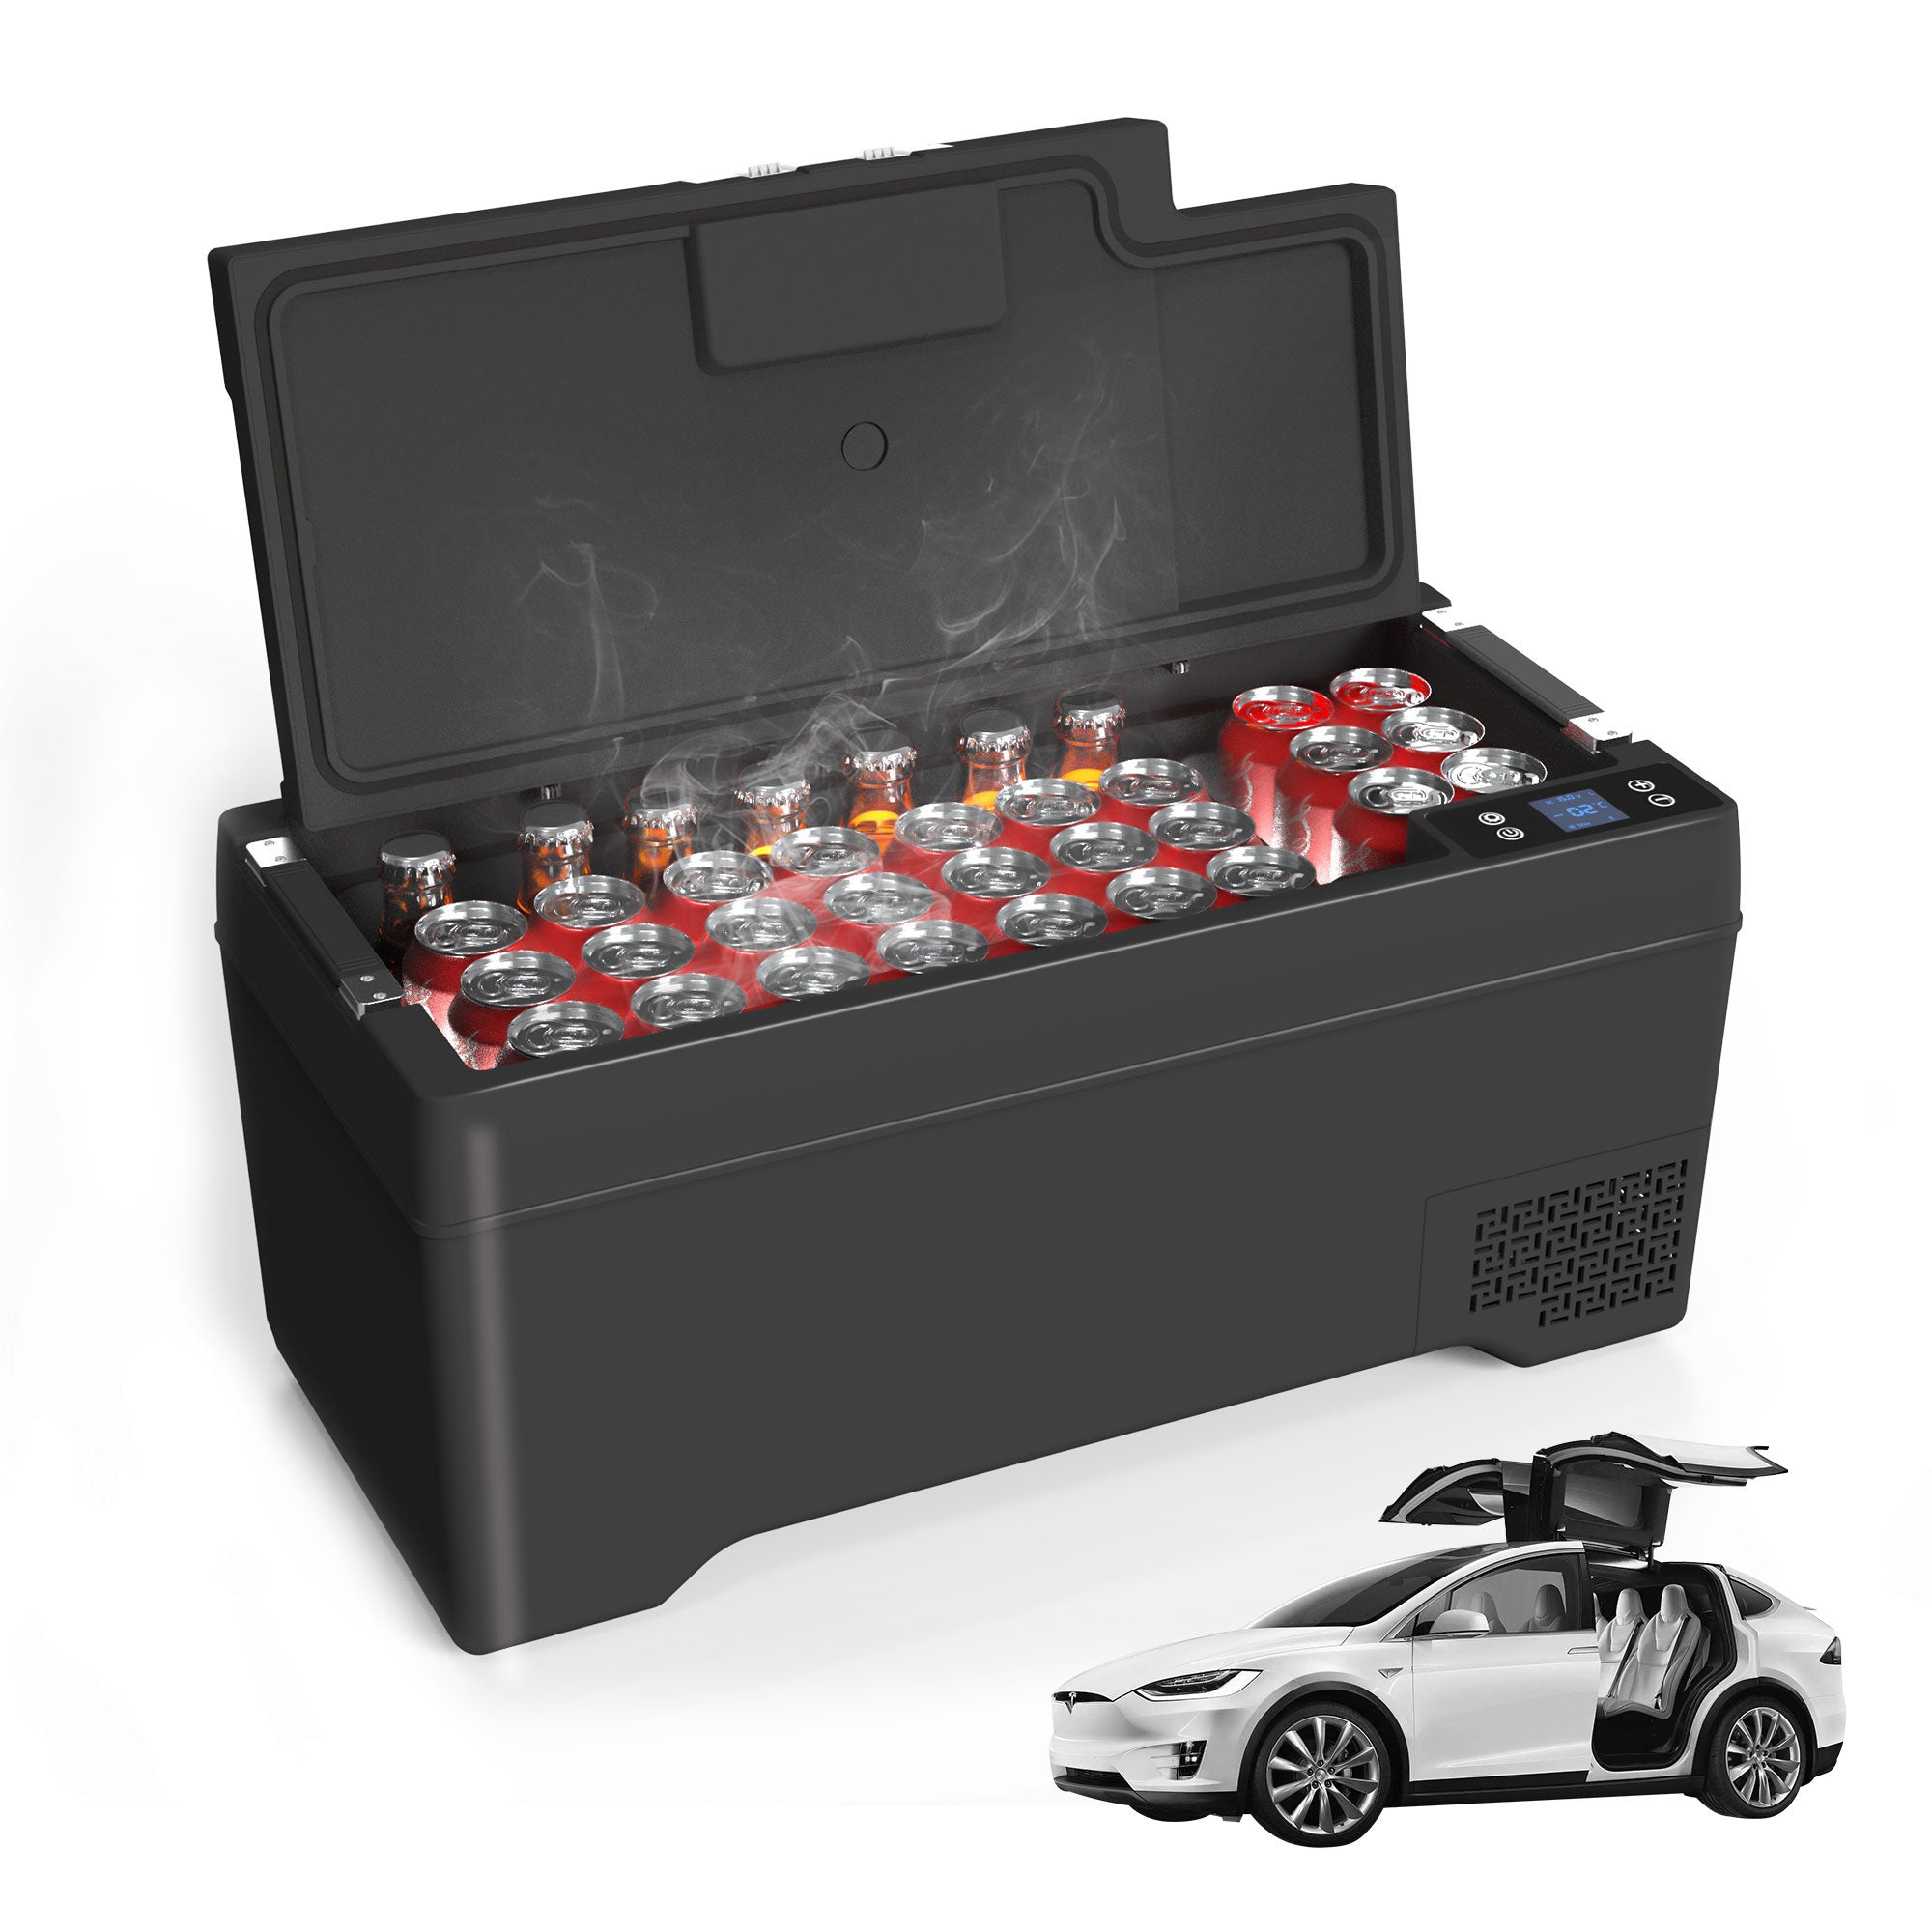 Portable freezer specially designed for Tesla Model X